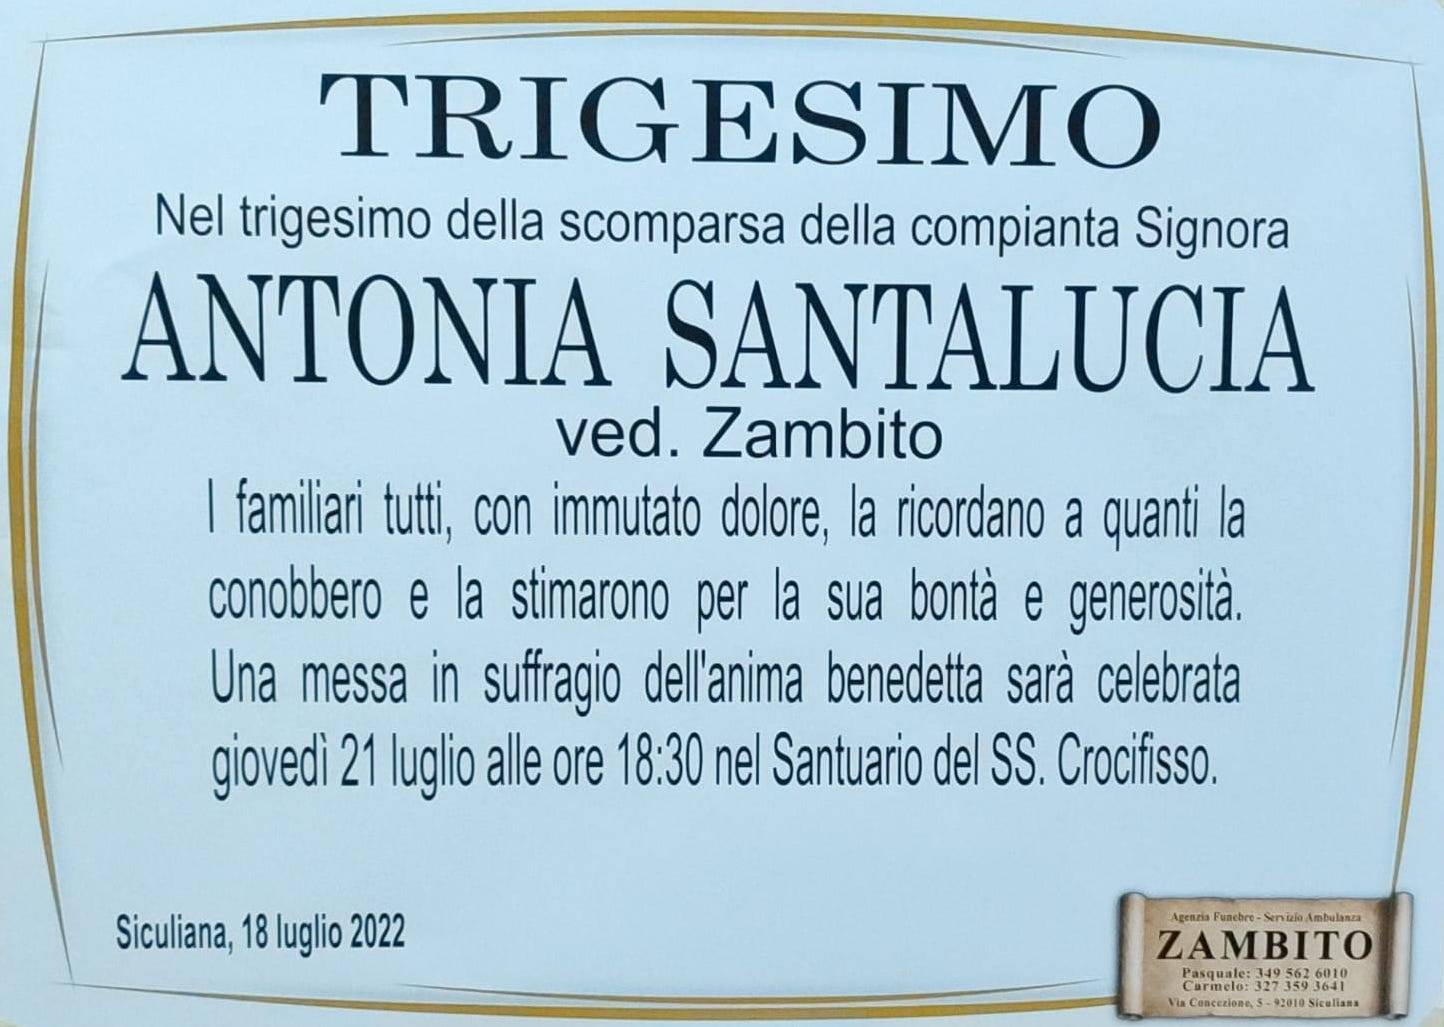 Antonia Santalucia